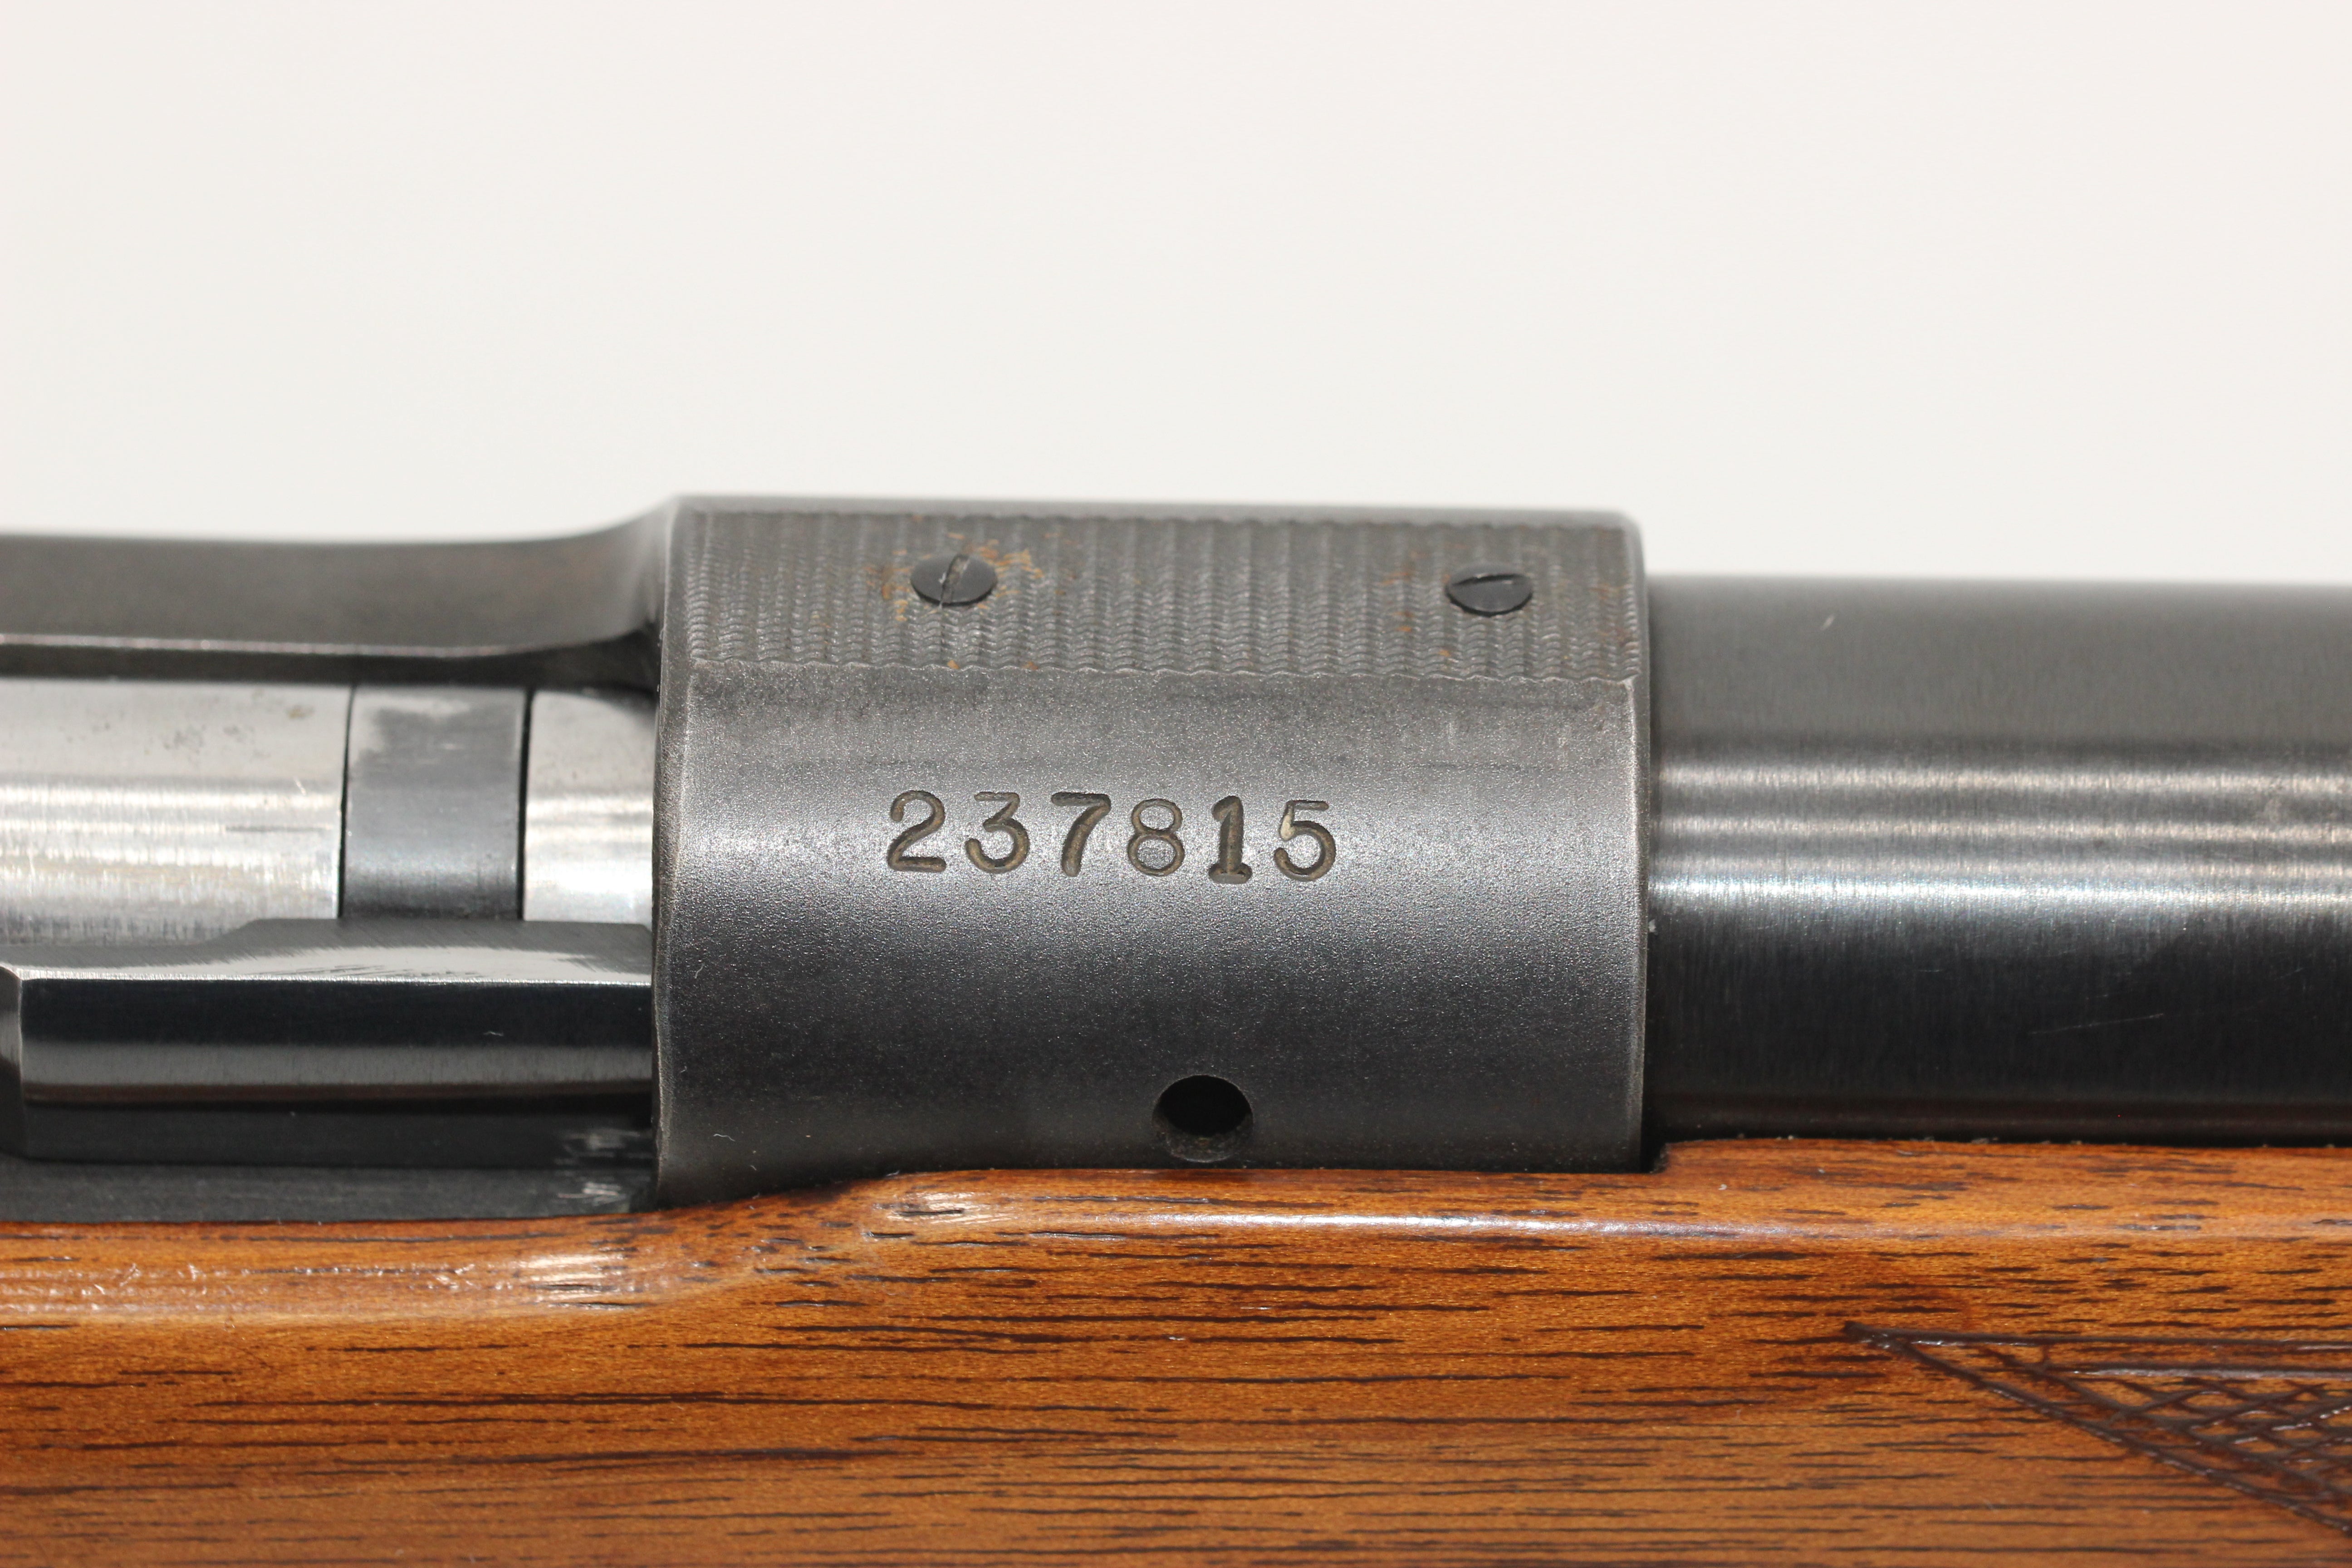 .30-06 Springfield Standard Rifle - 1952